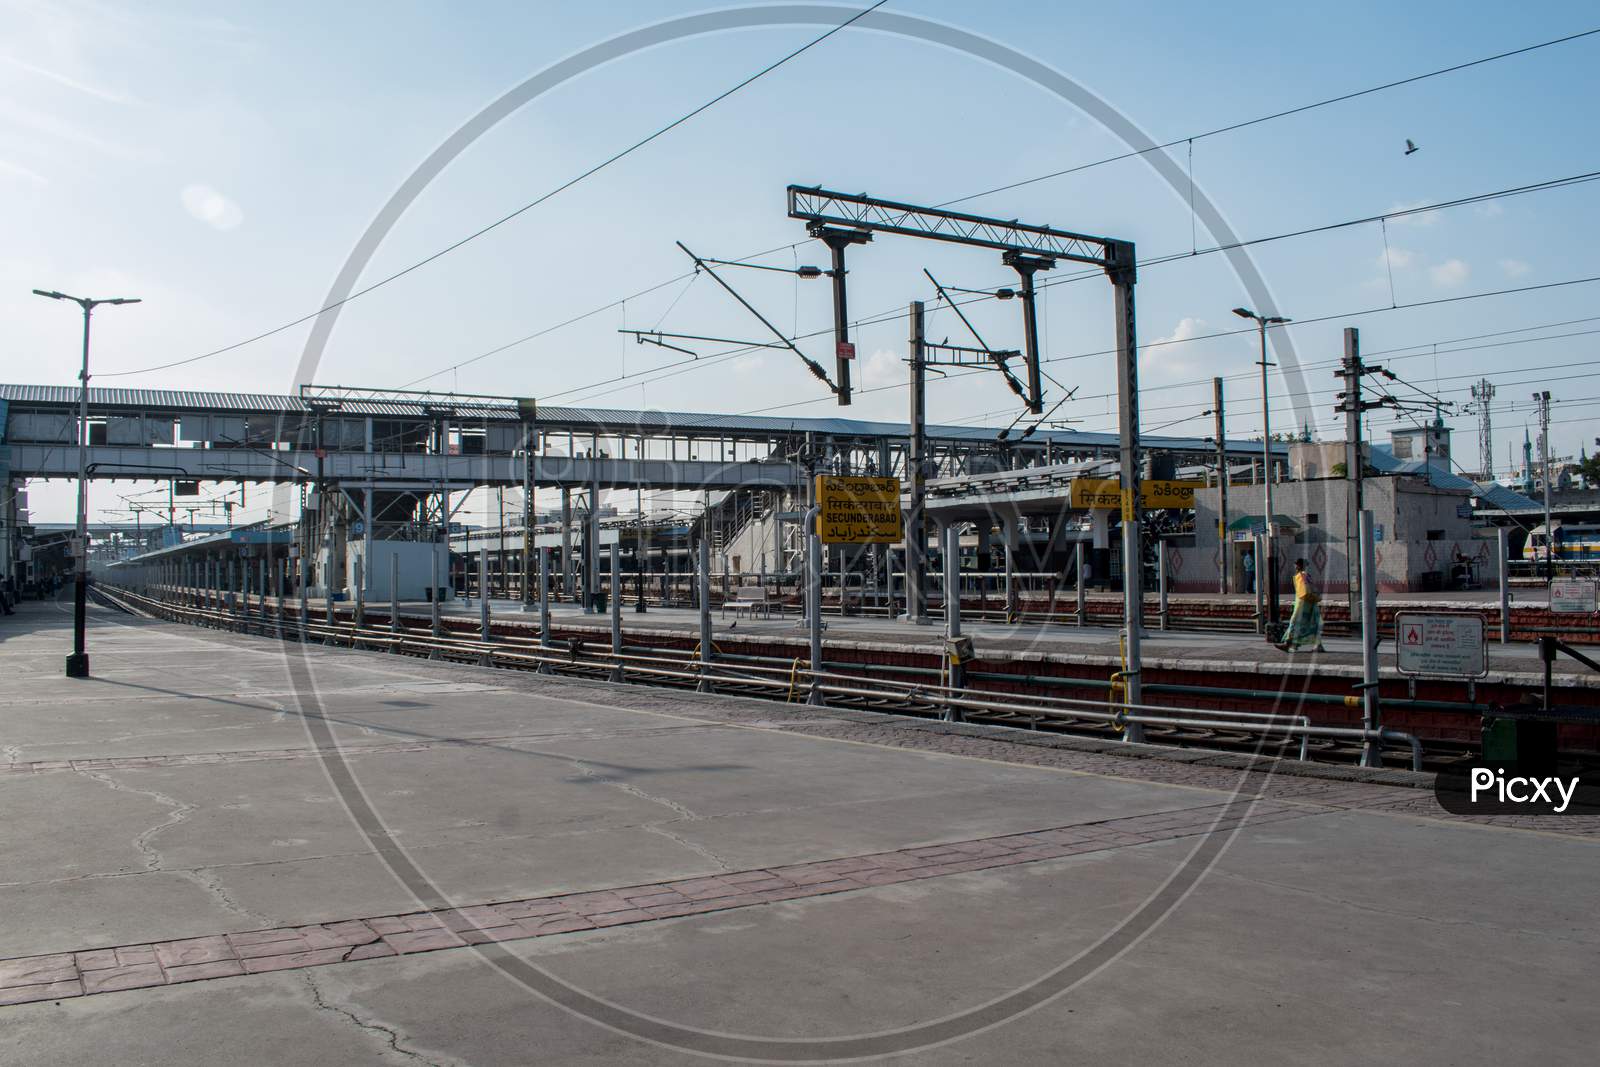 Secundrabad Railway Station Platforms